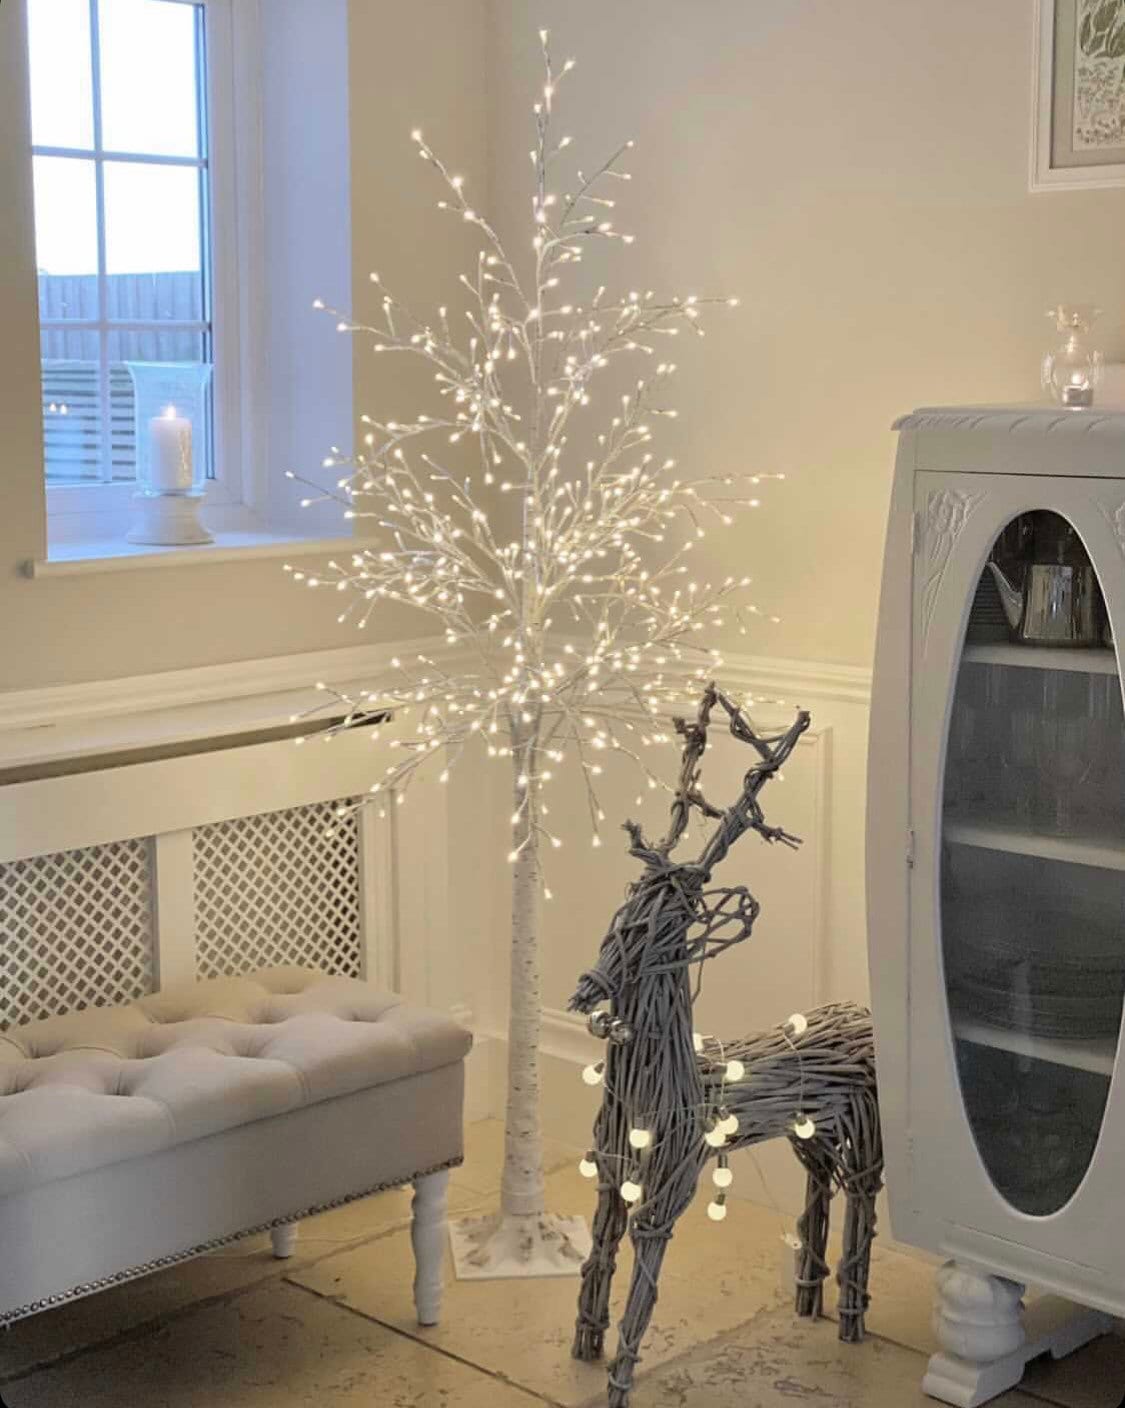 Snowy Pure White Mini Artificial Christmas Trees, Small Christmas Trees,  Halloween Display, Miniature Christmas Trees, Bottle Brush Trees 